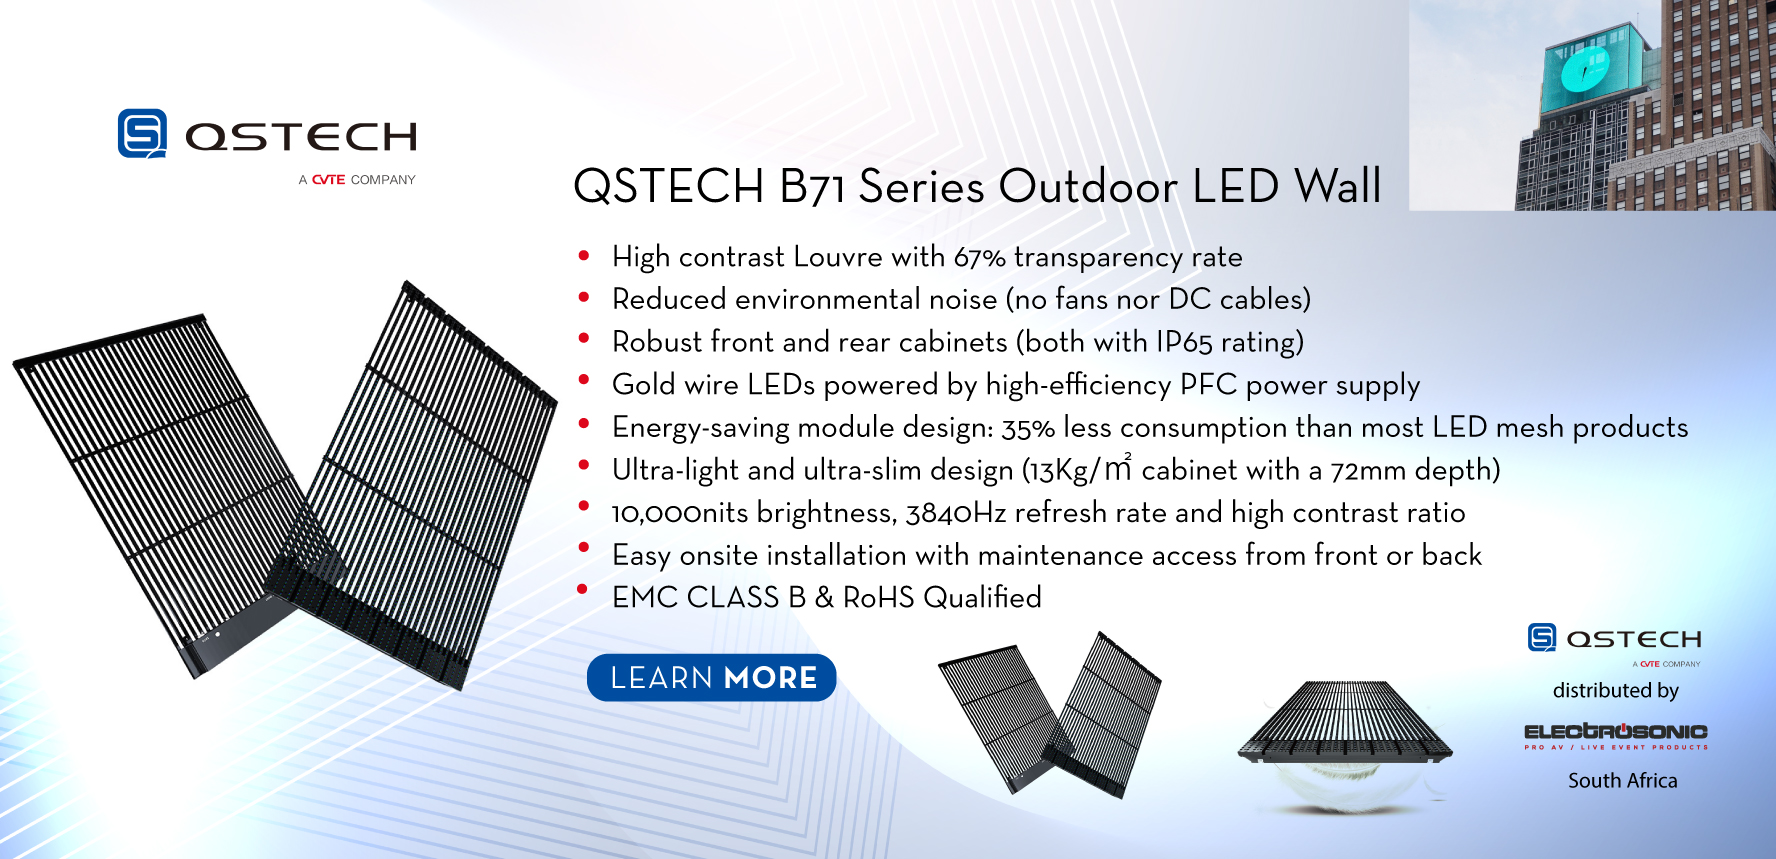 QSTECH-B71-Series-Outdoor-LED-Wall